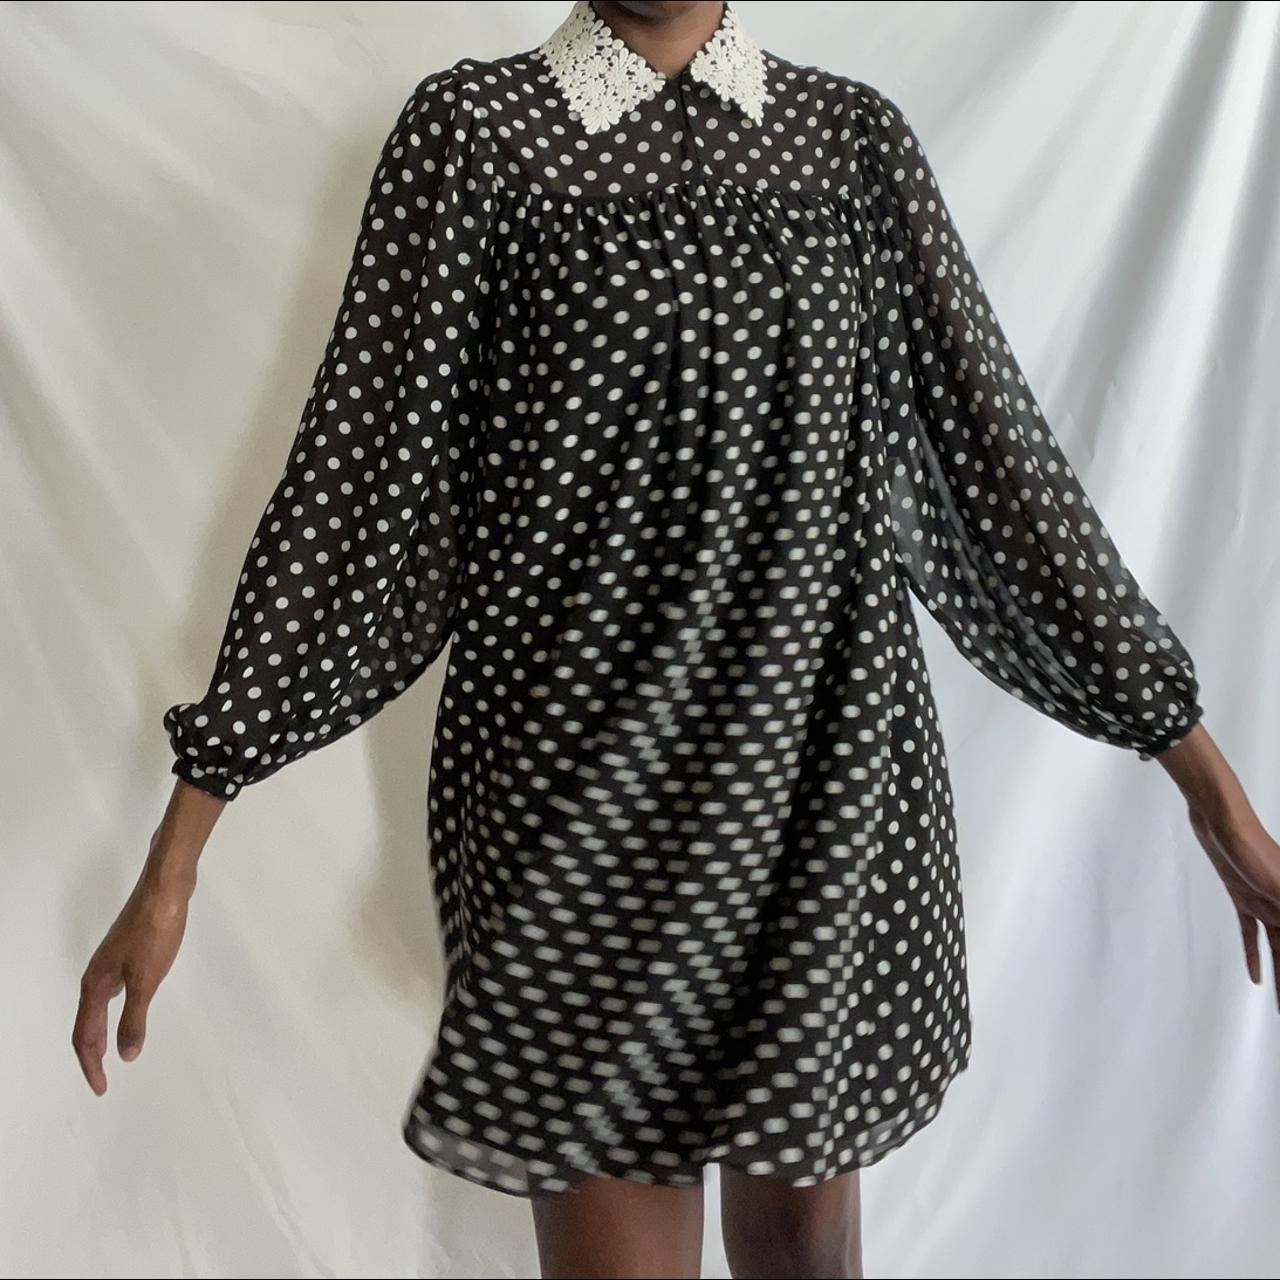 Kate Spade Skirt with polka dot pattern, Women's Clothing